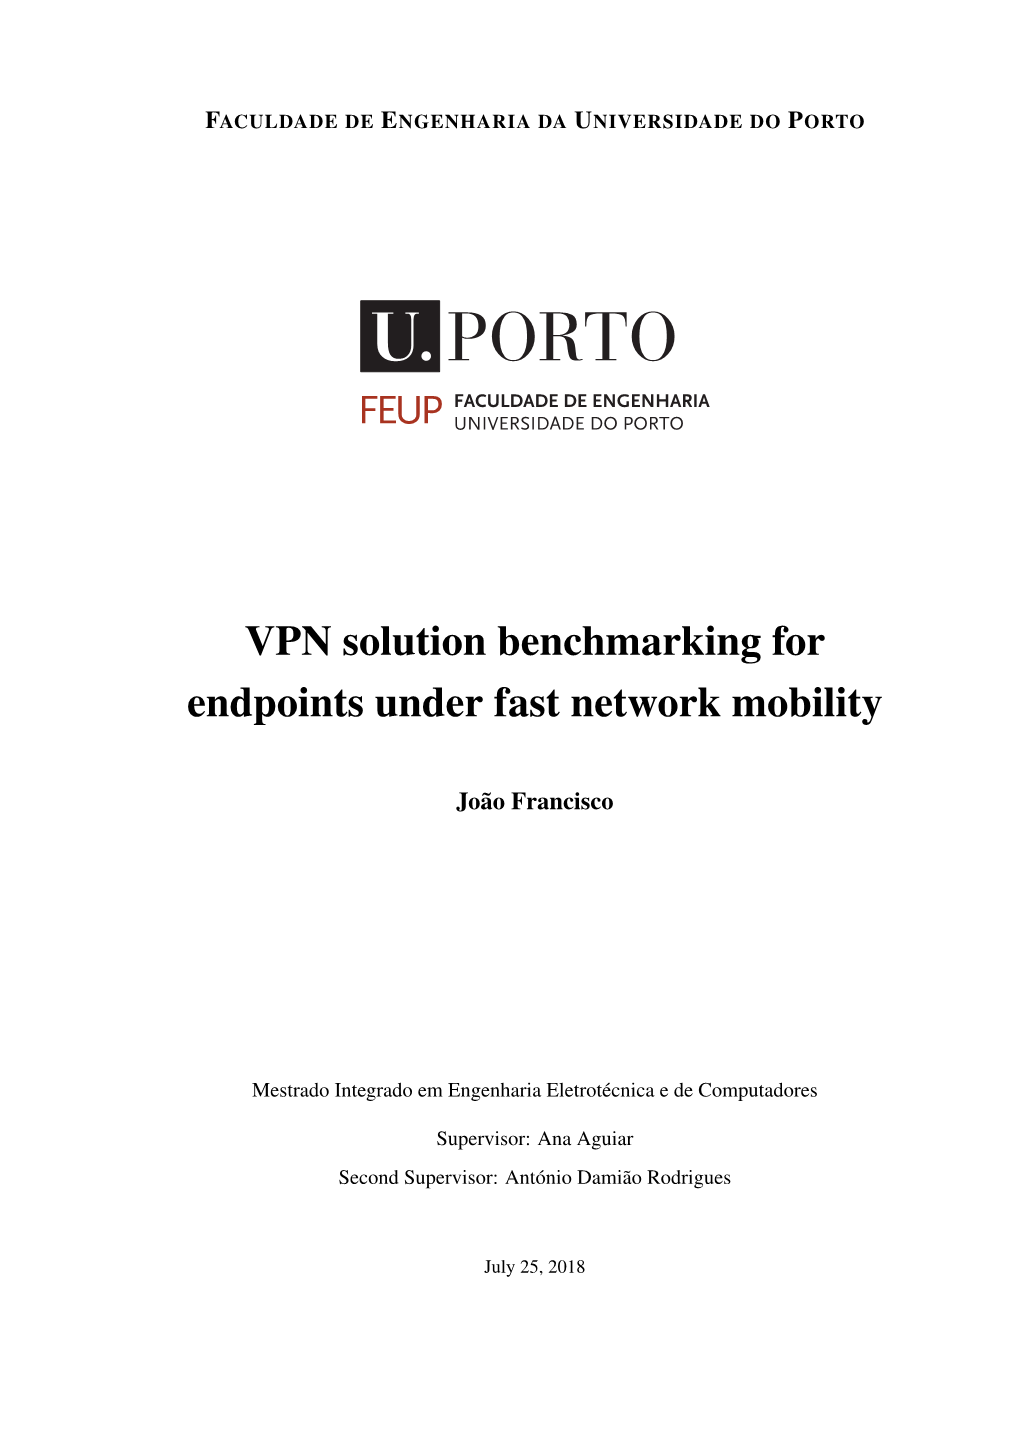 VPN Solution Benchmarking for Endpoints Under Fast Network Mobility